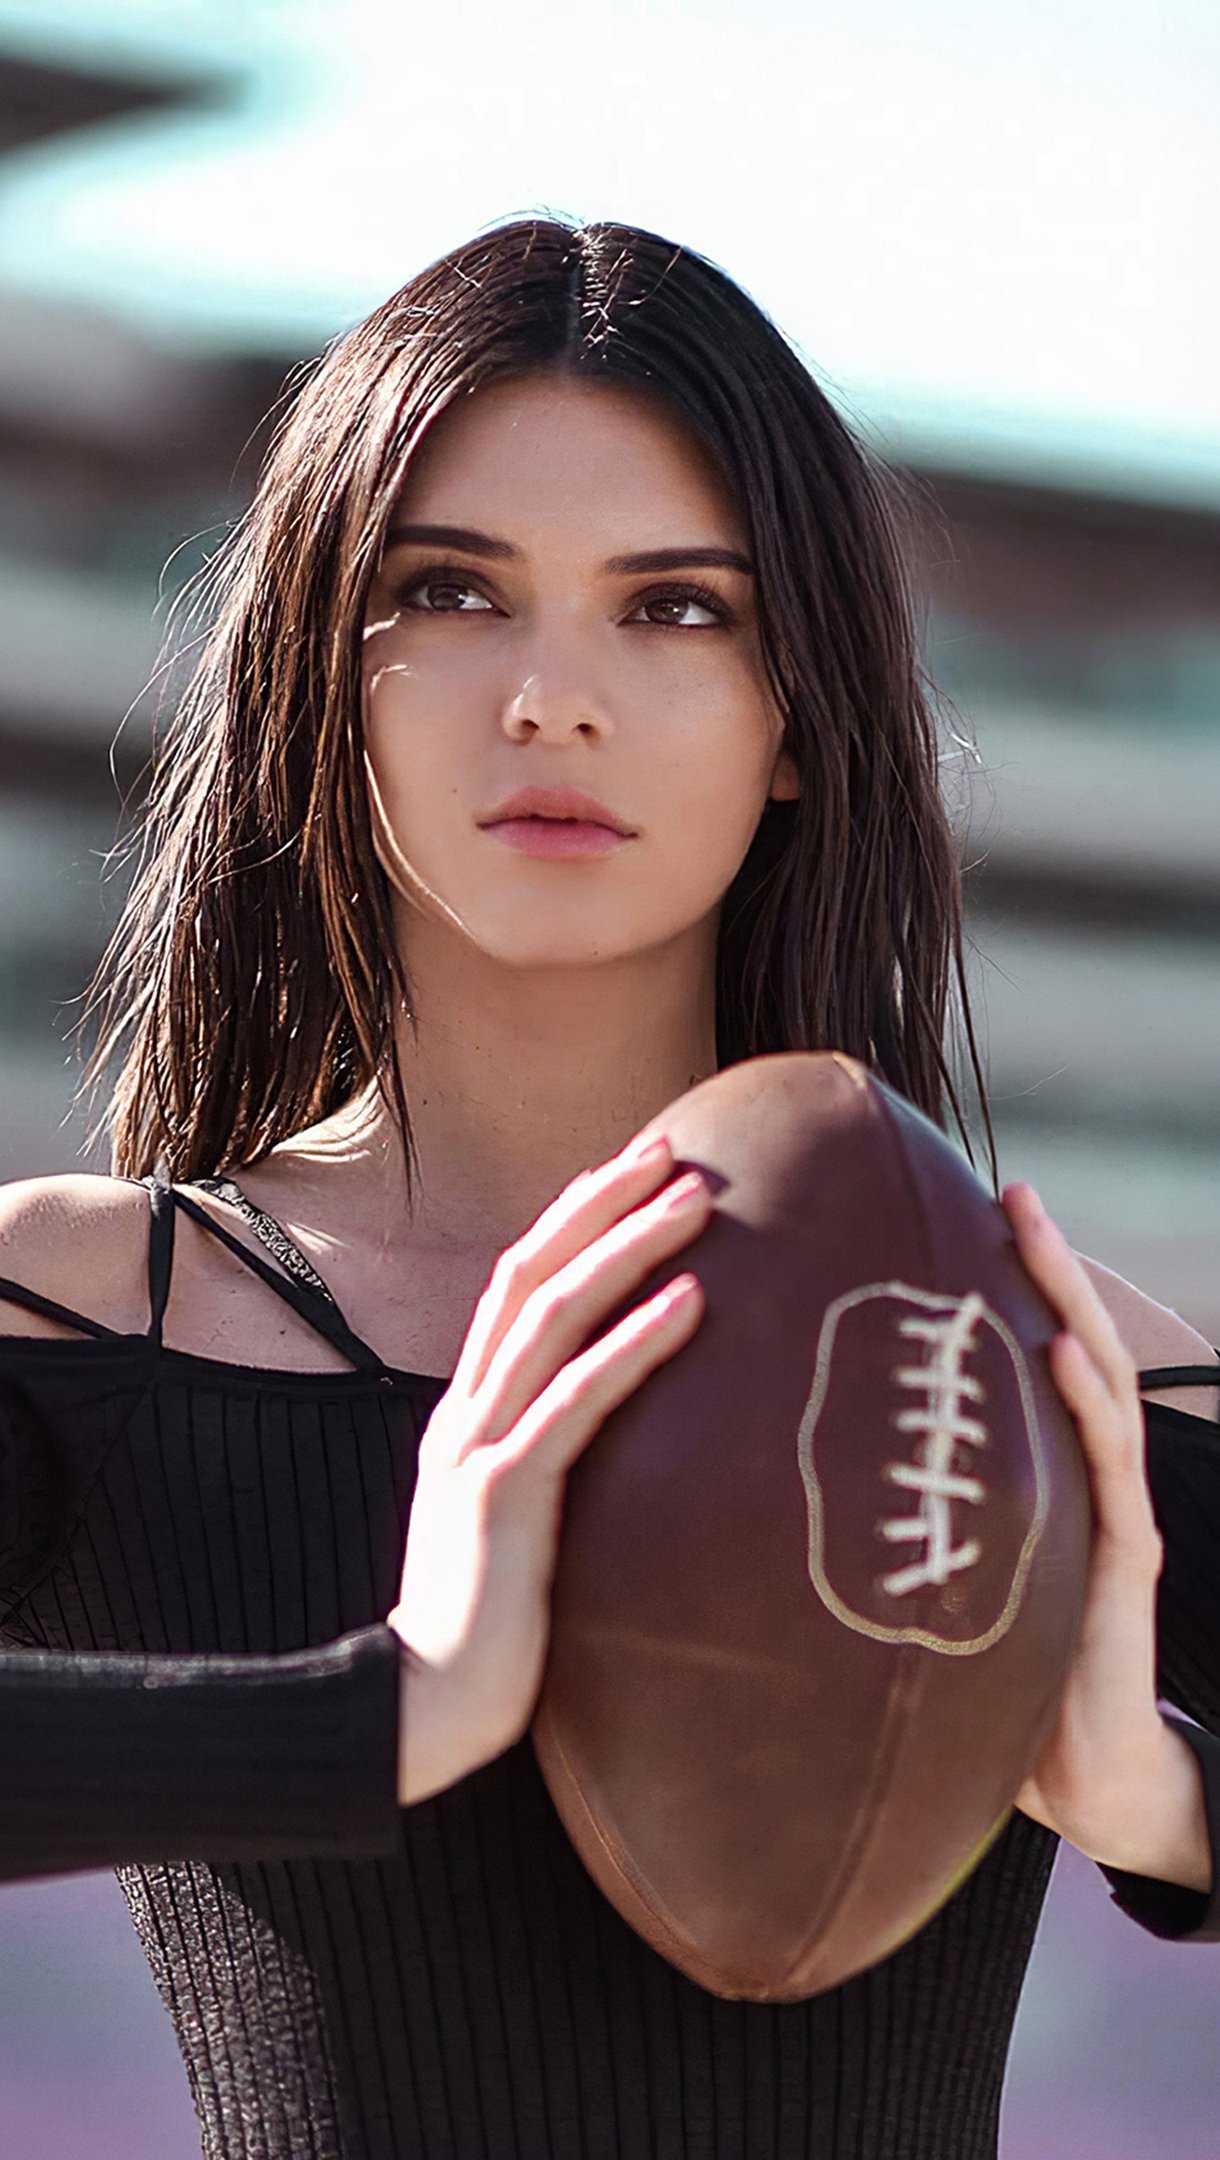 Wallpaper Kendall Jenner With football ball Vertical